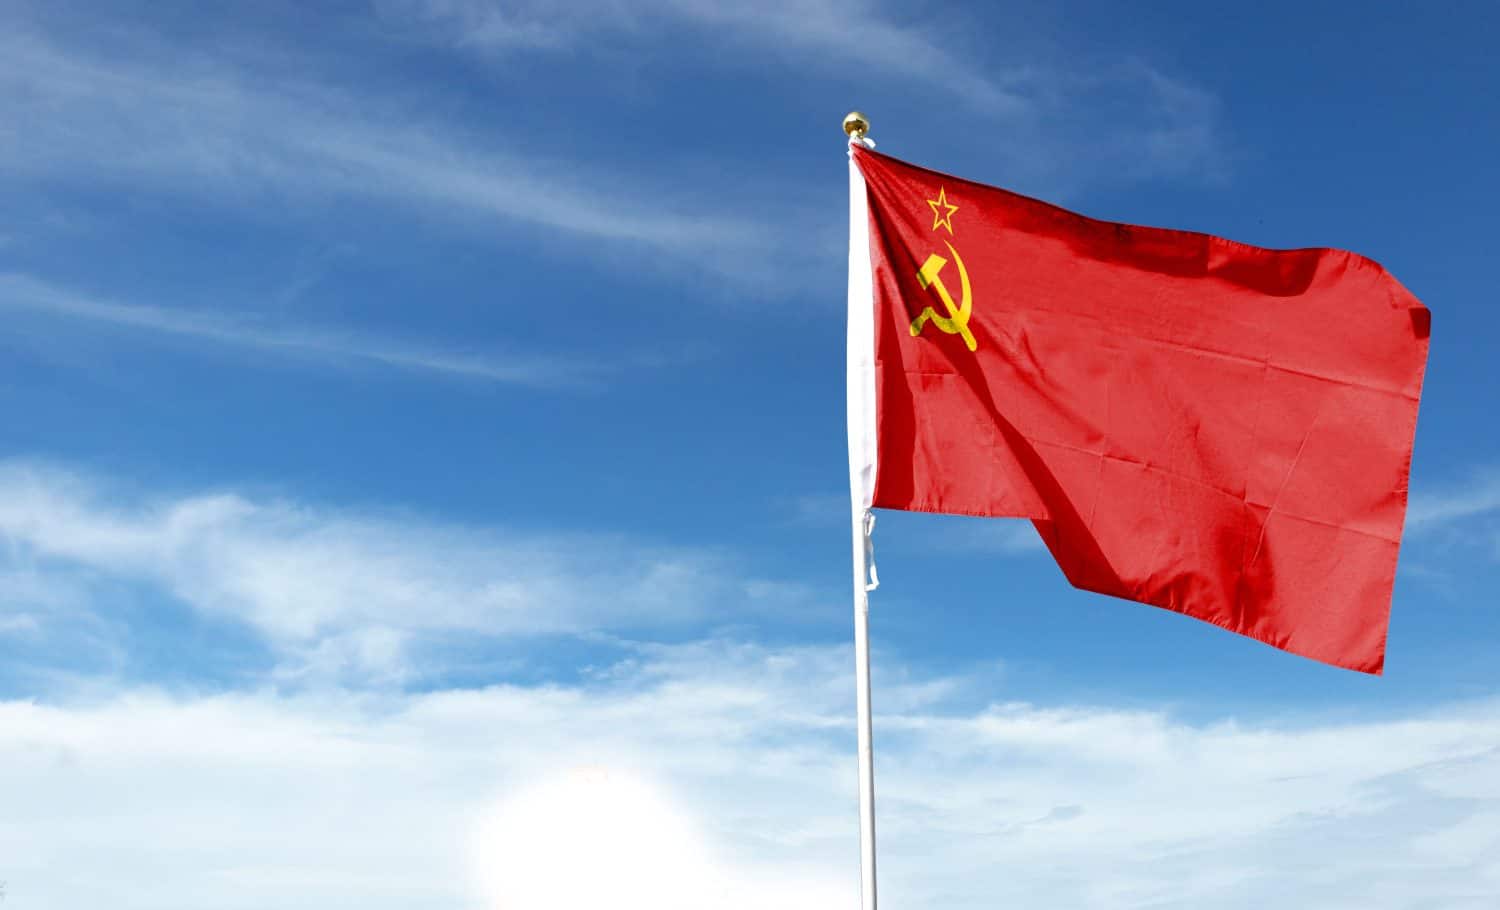 Soviet Union flag on cloudy sky. waving in the sky